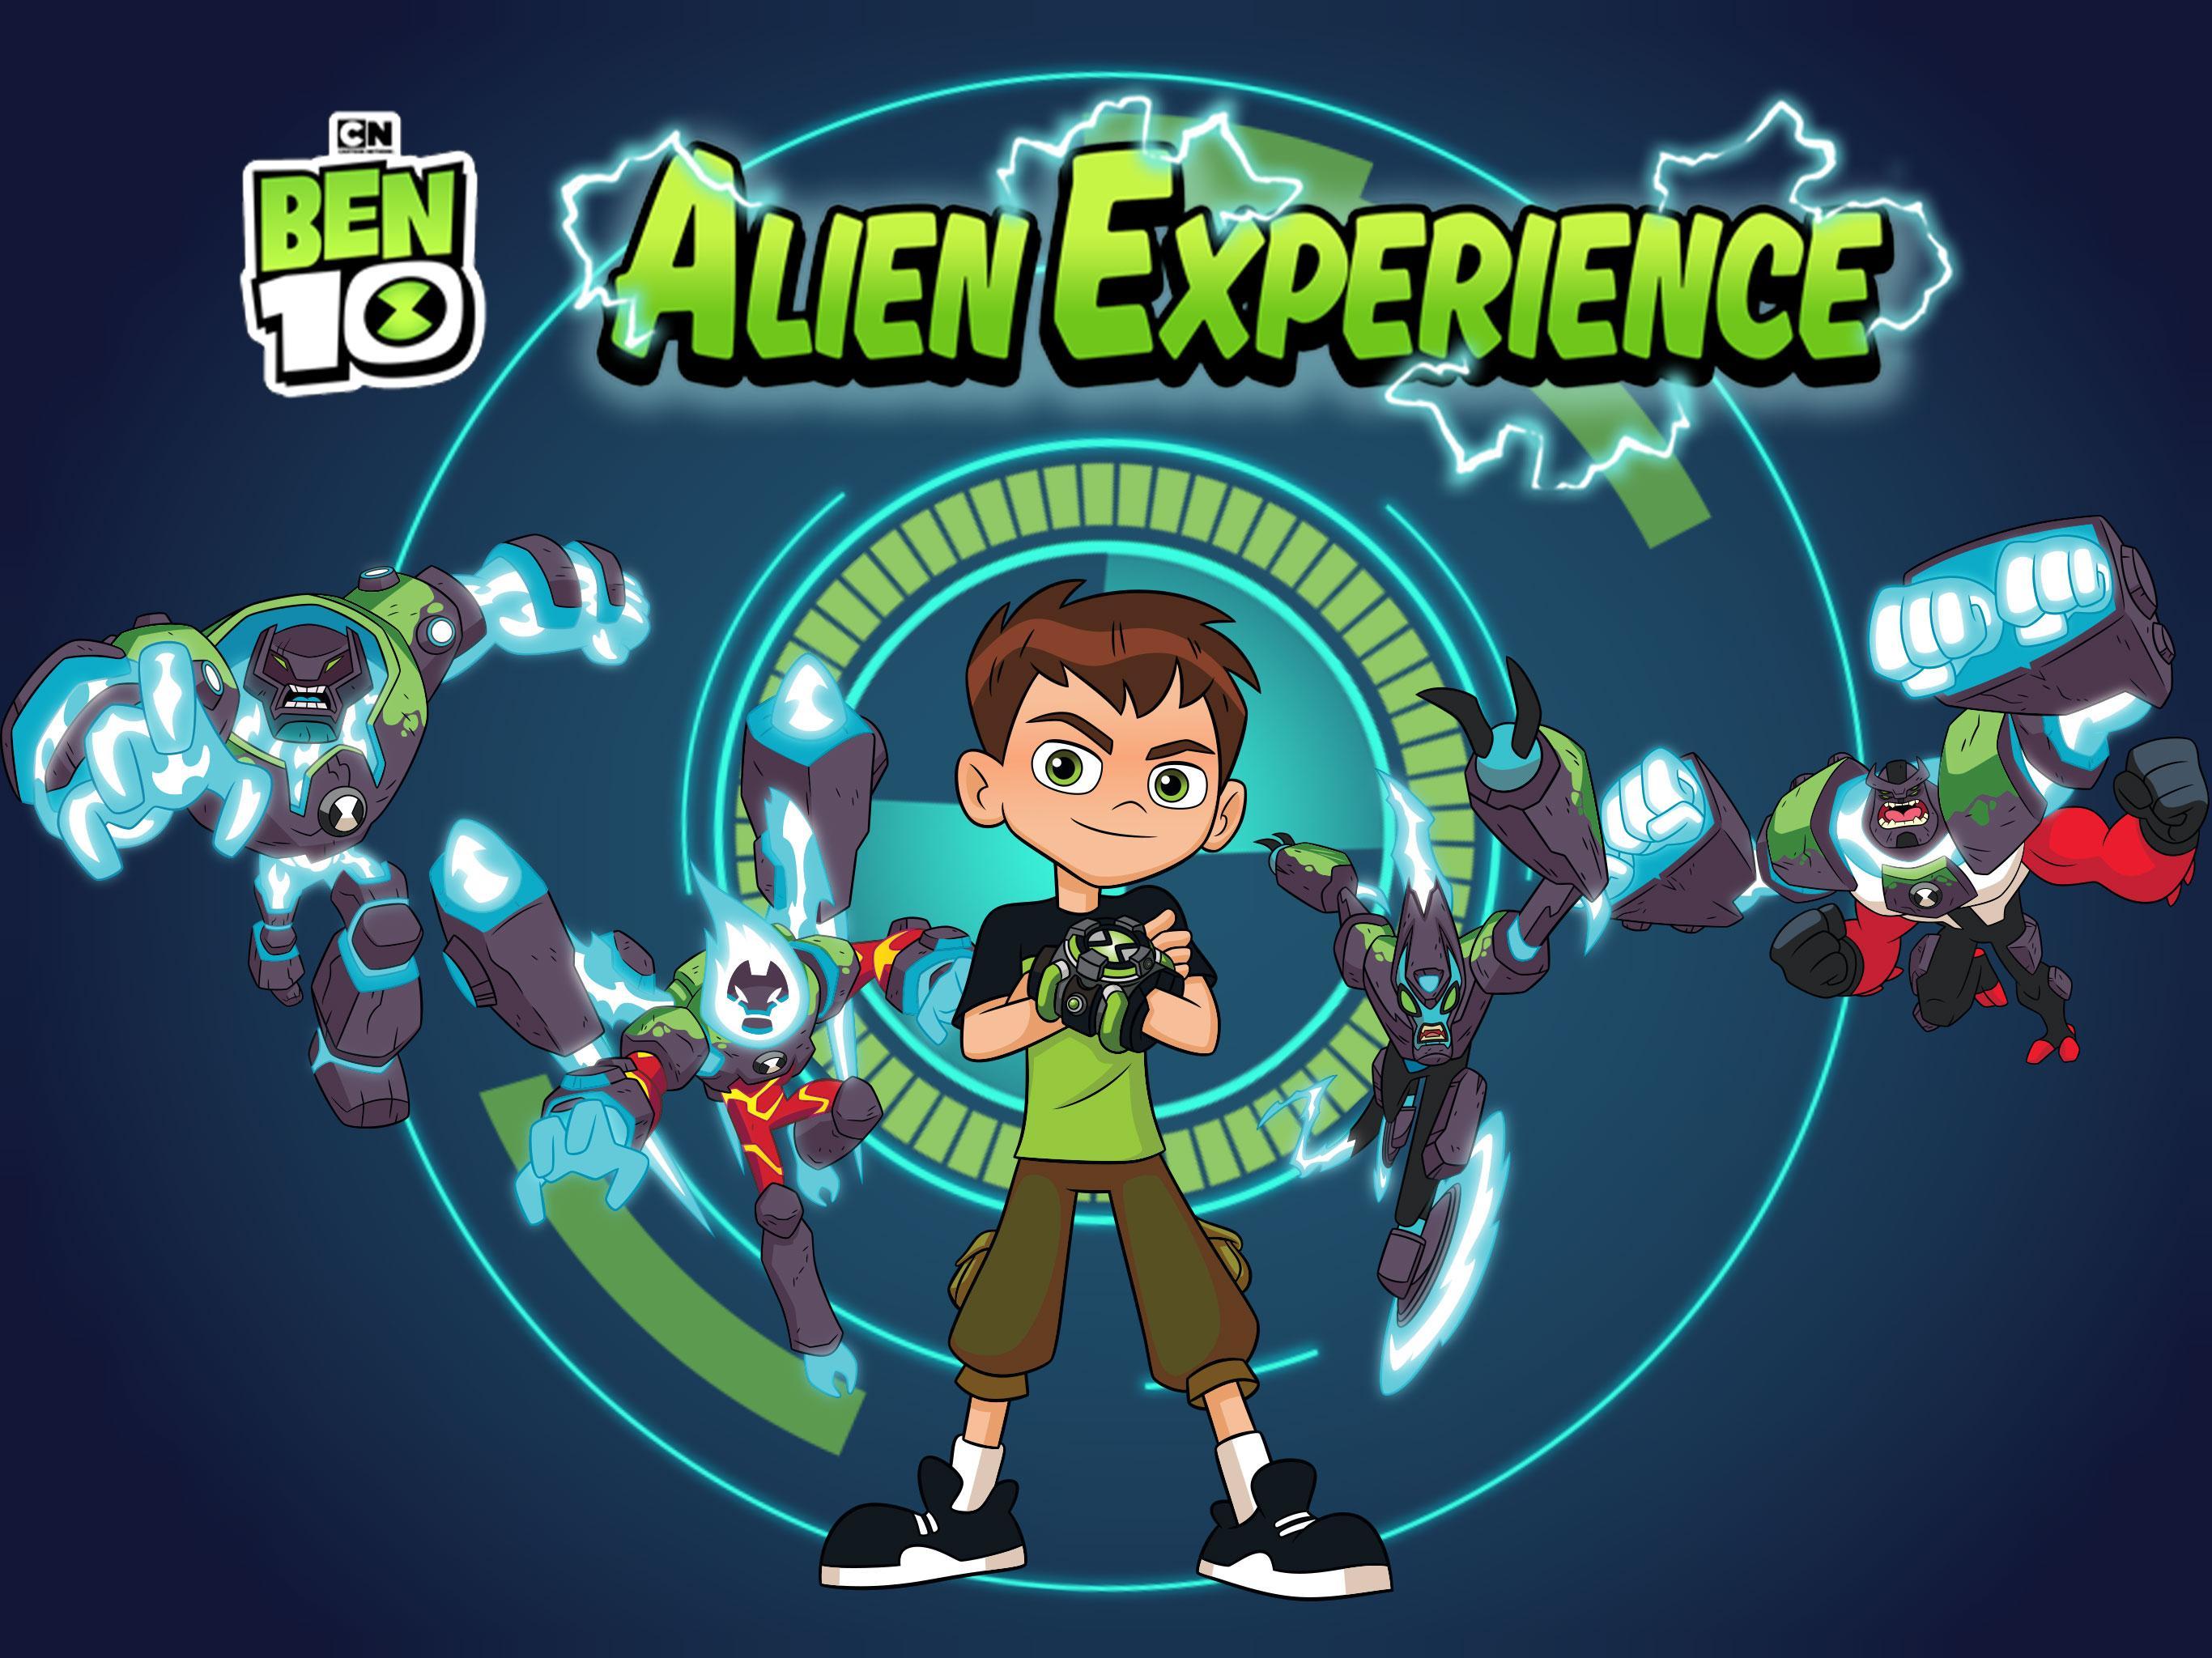 Ben 10 Alien Experience 360 Ar Fighting Action For Android Apk Download - roblox simulador do ben 10 com os aliens do omnitrix